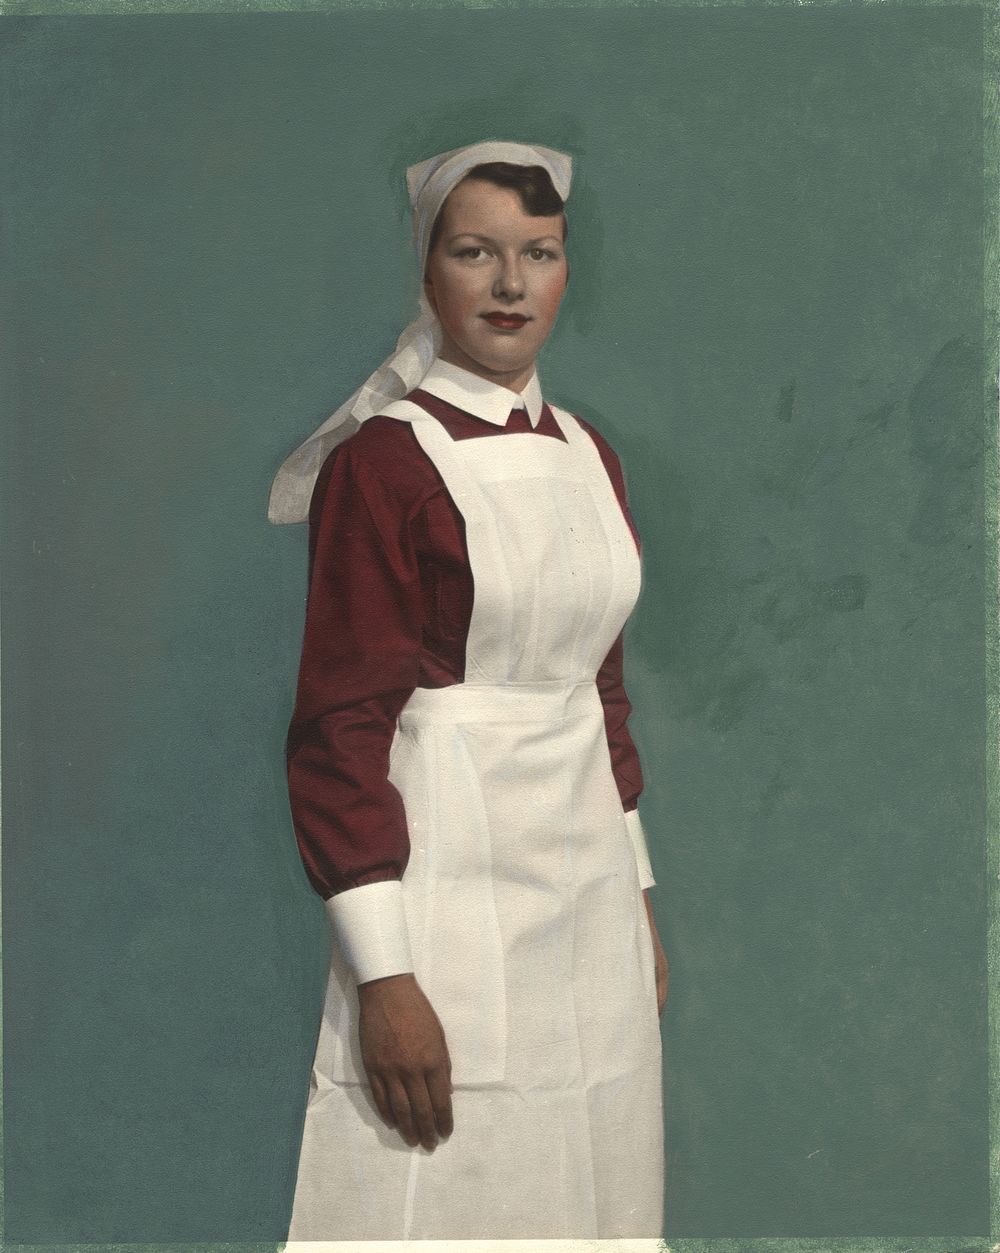 Nurse wearing uniform from Northern Ireland. Original public domain image from Flickr